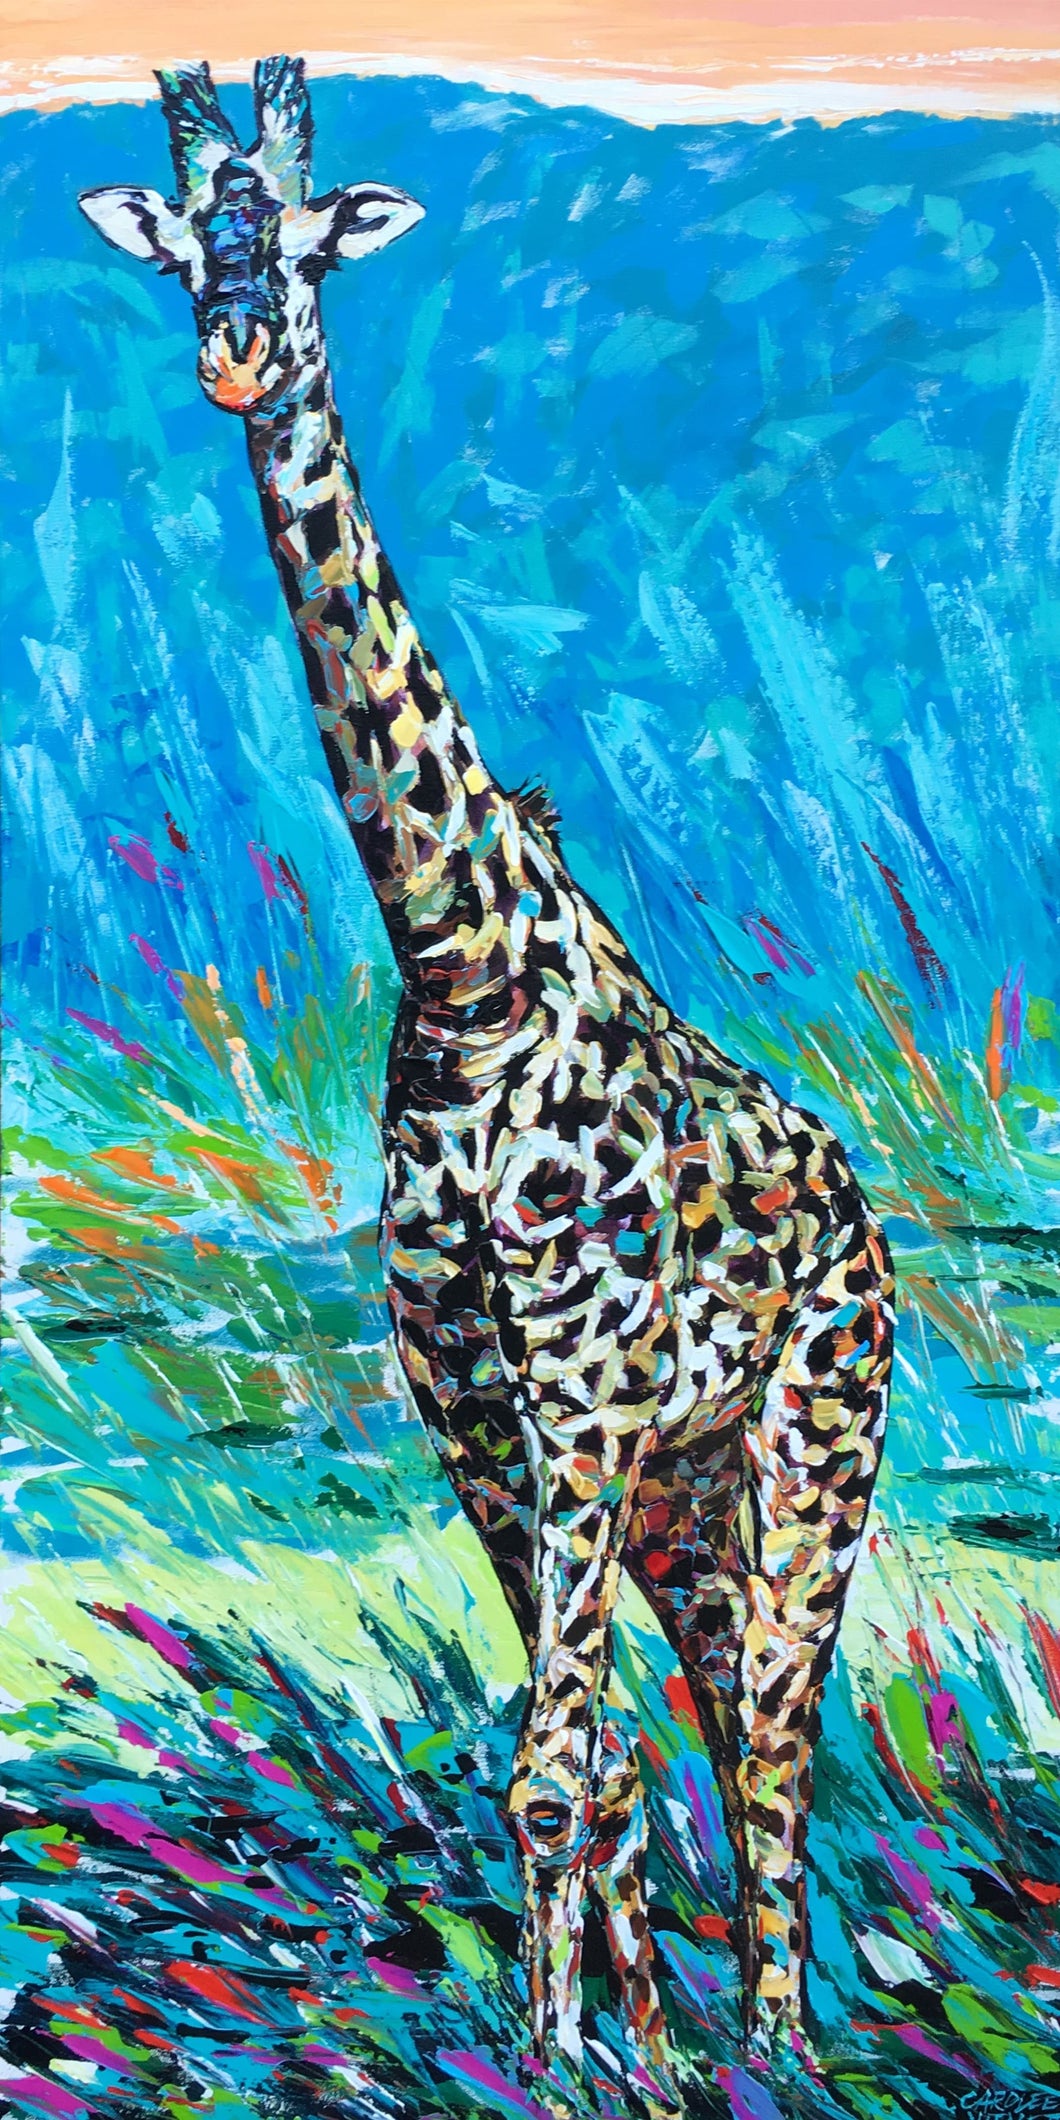 Wild Giraffe II | Canvas Print